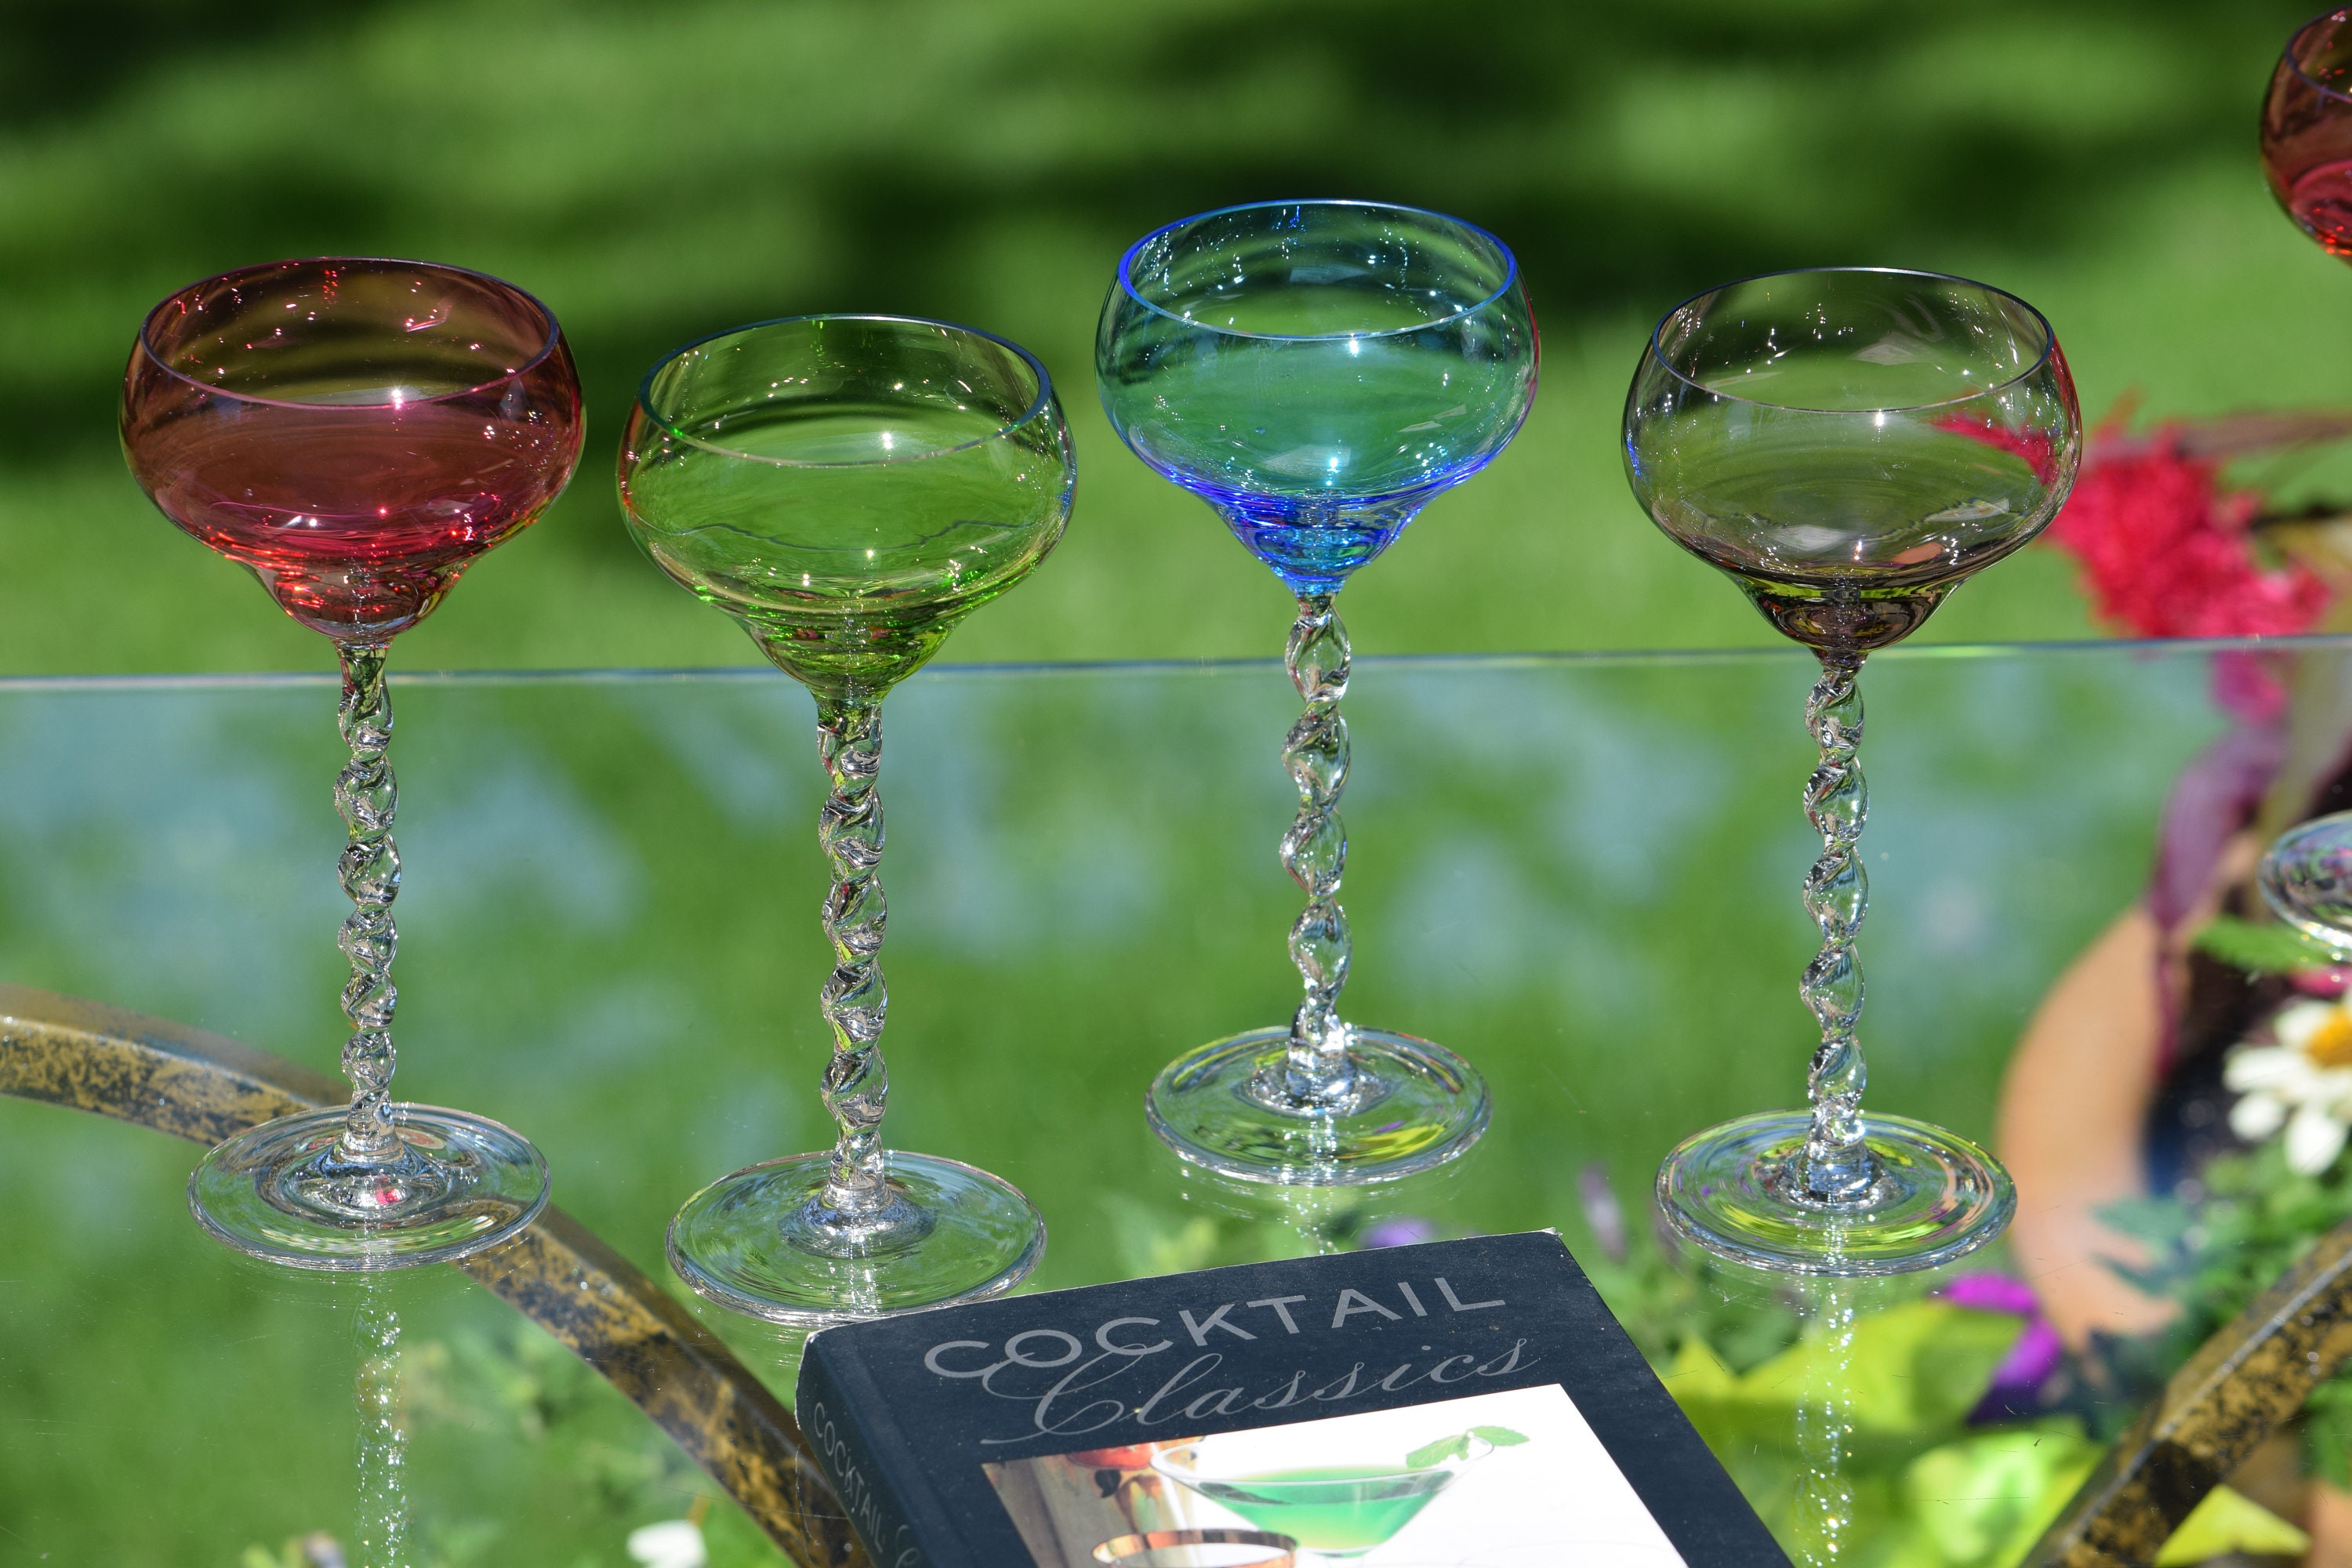 Colored Stem Wine Glasses Set of 4